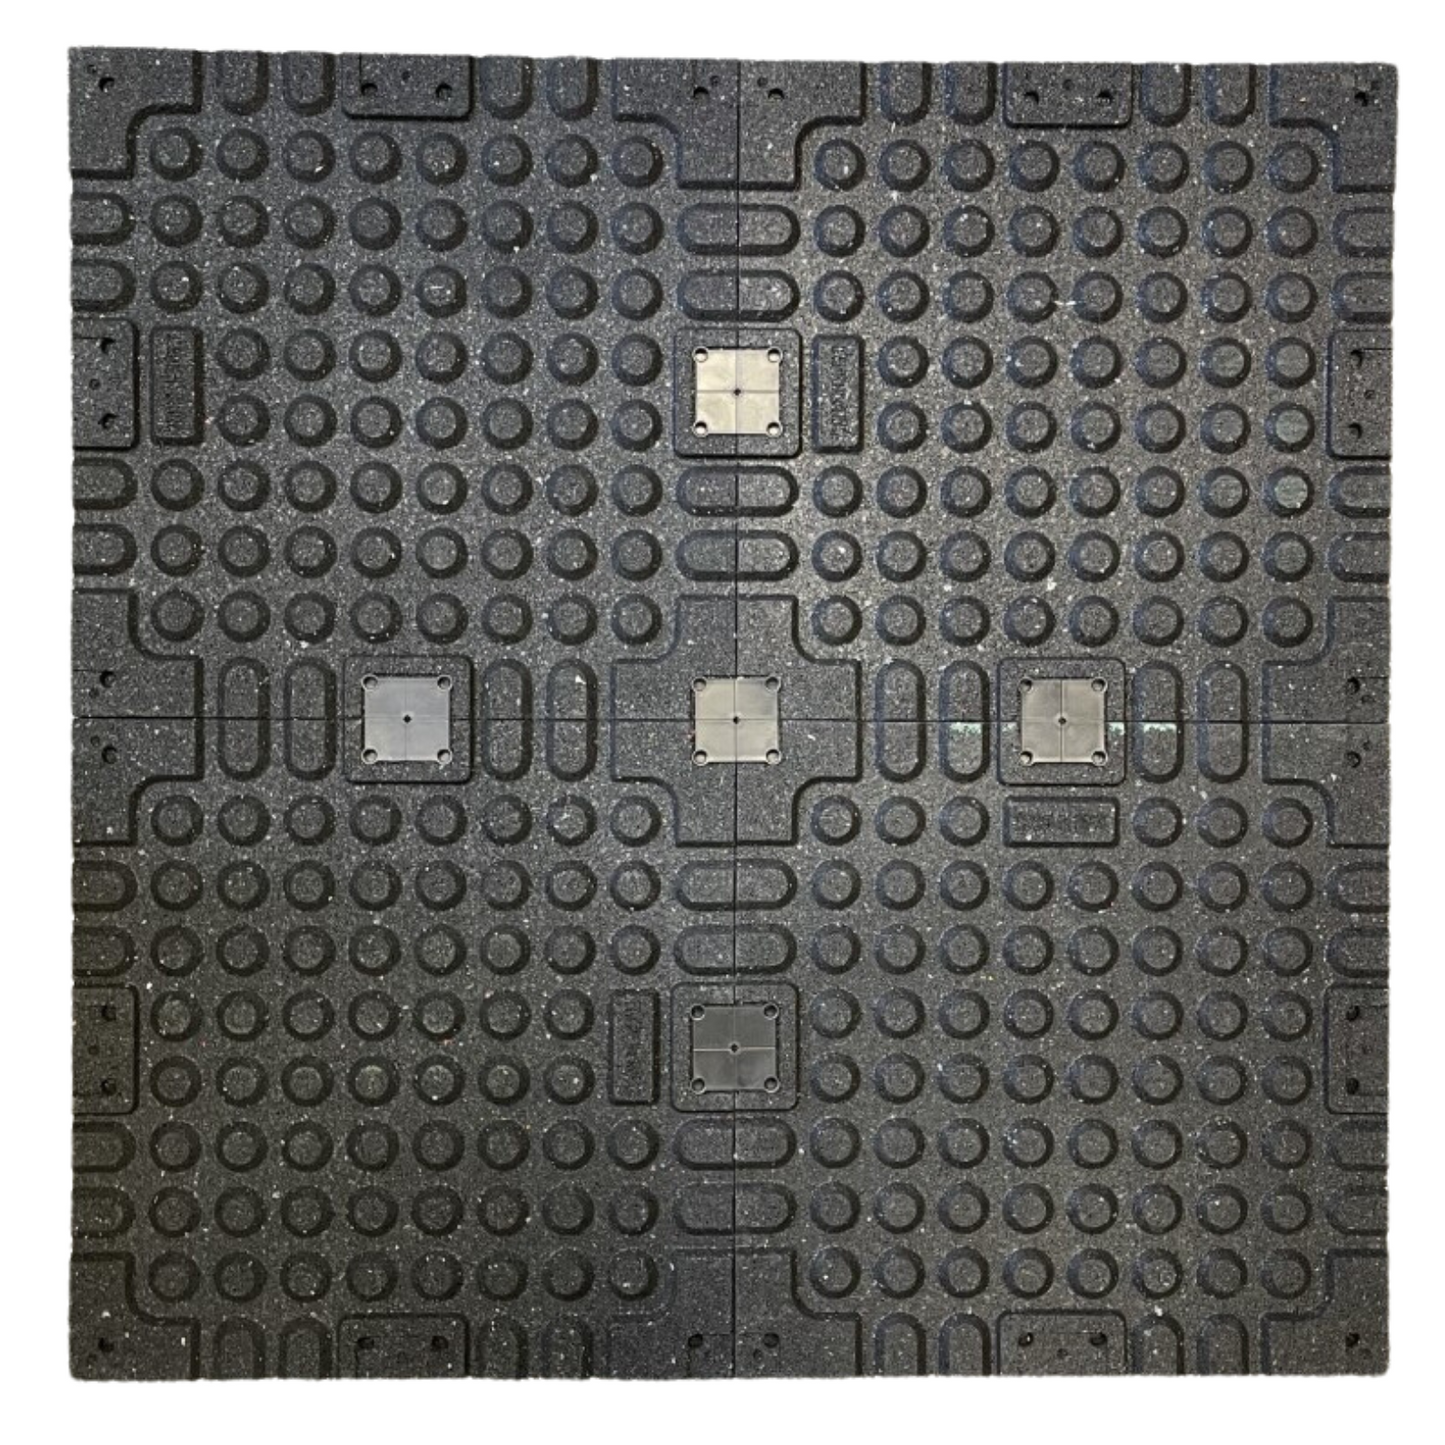 Exersci® Premium Red Speckled Rubber Tiles with Connectors 50cm x 50cm